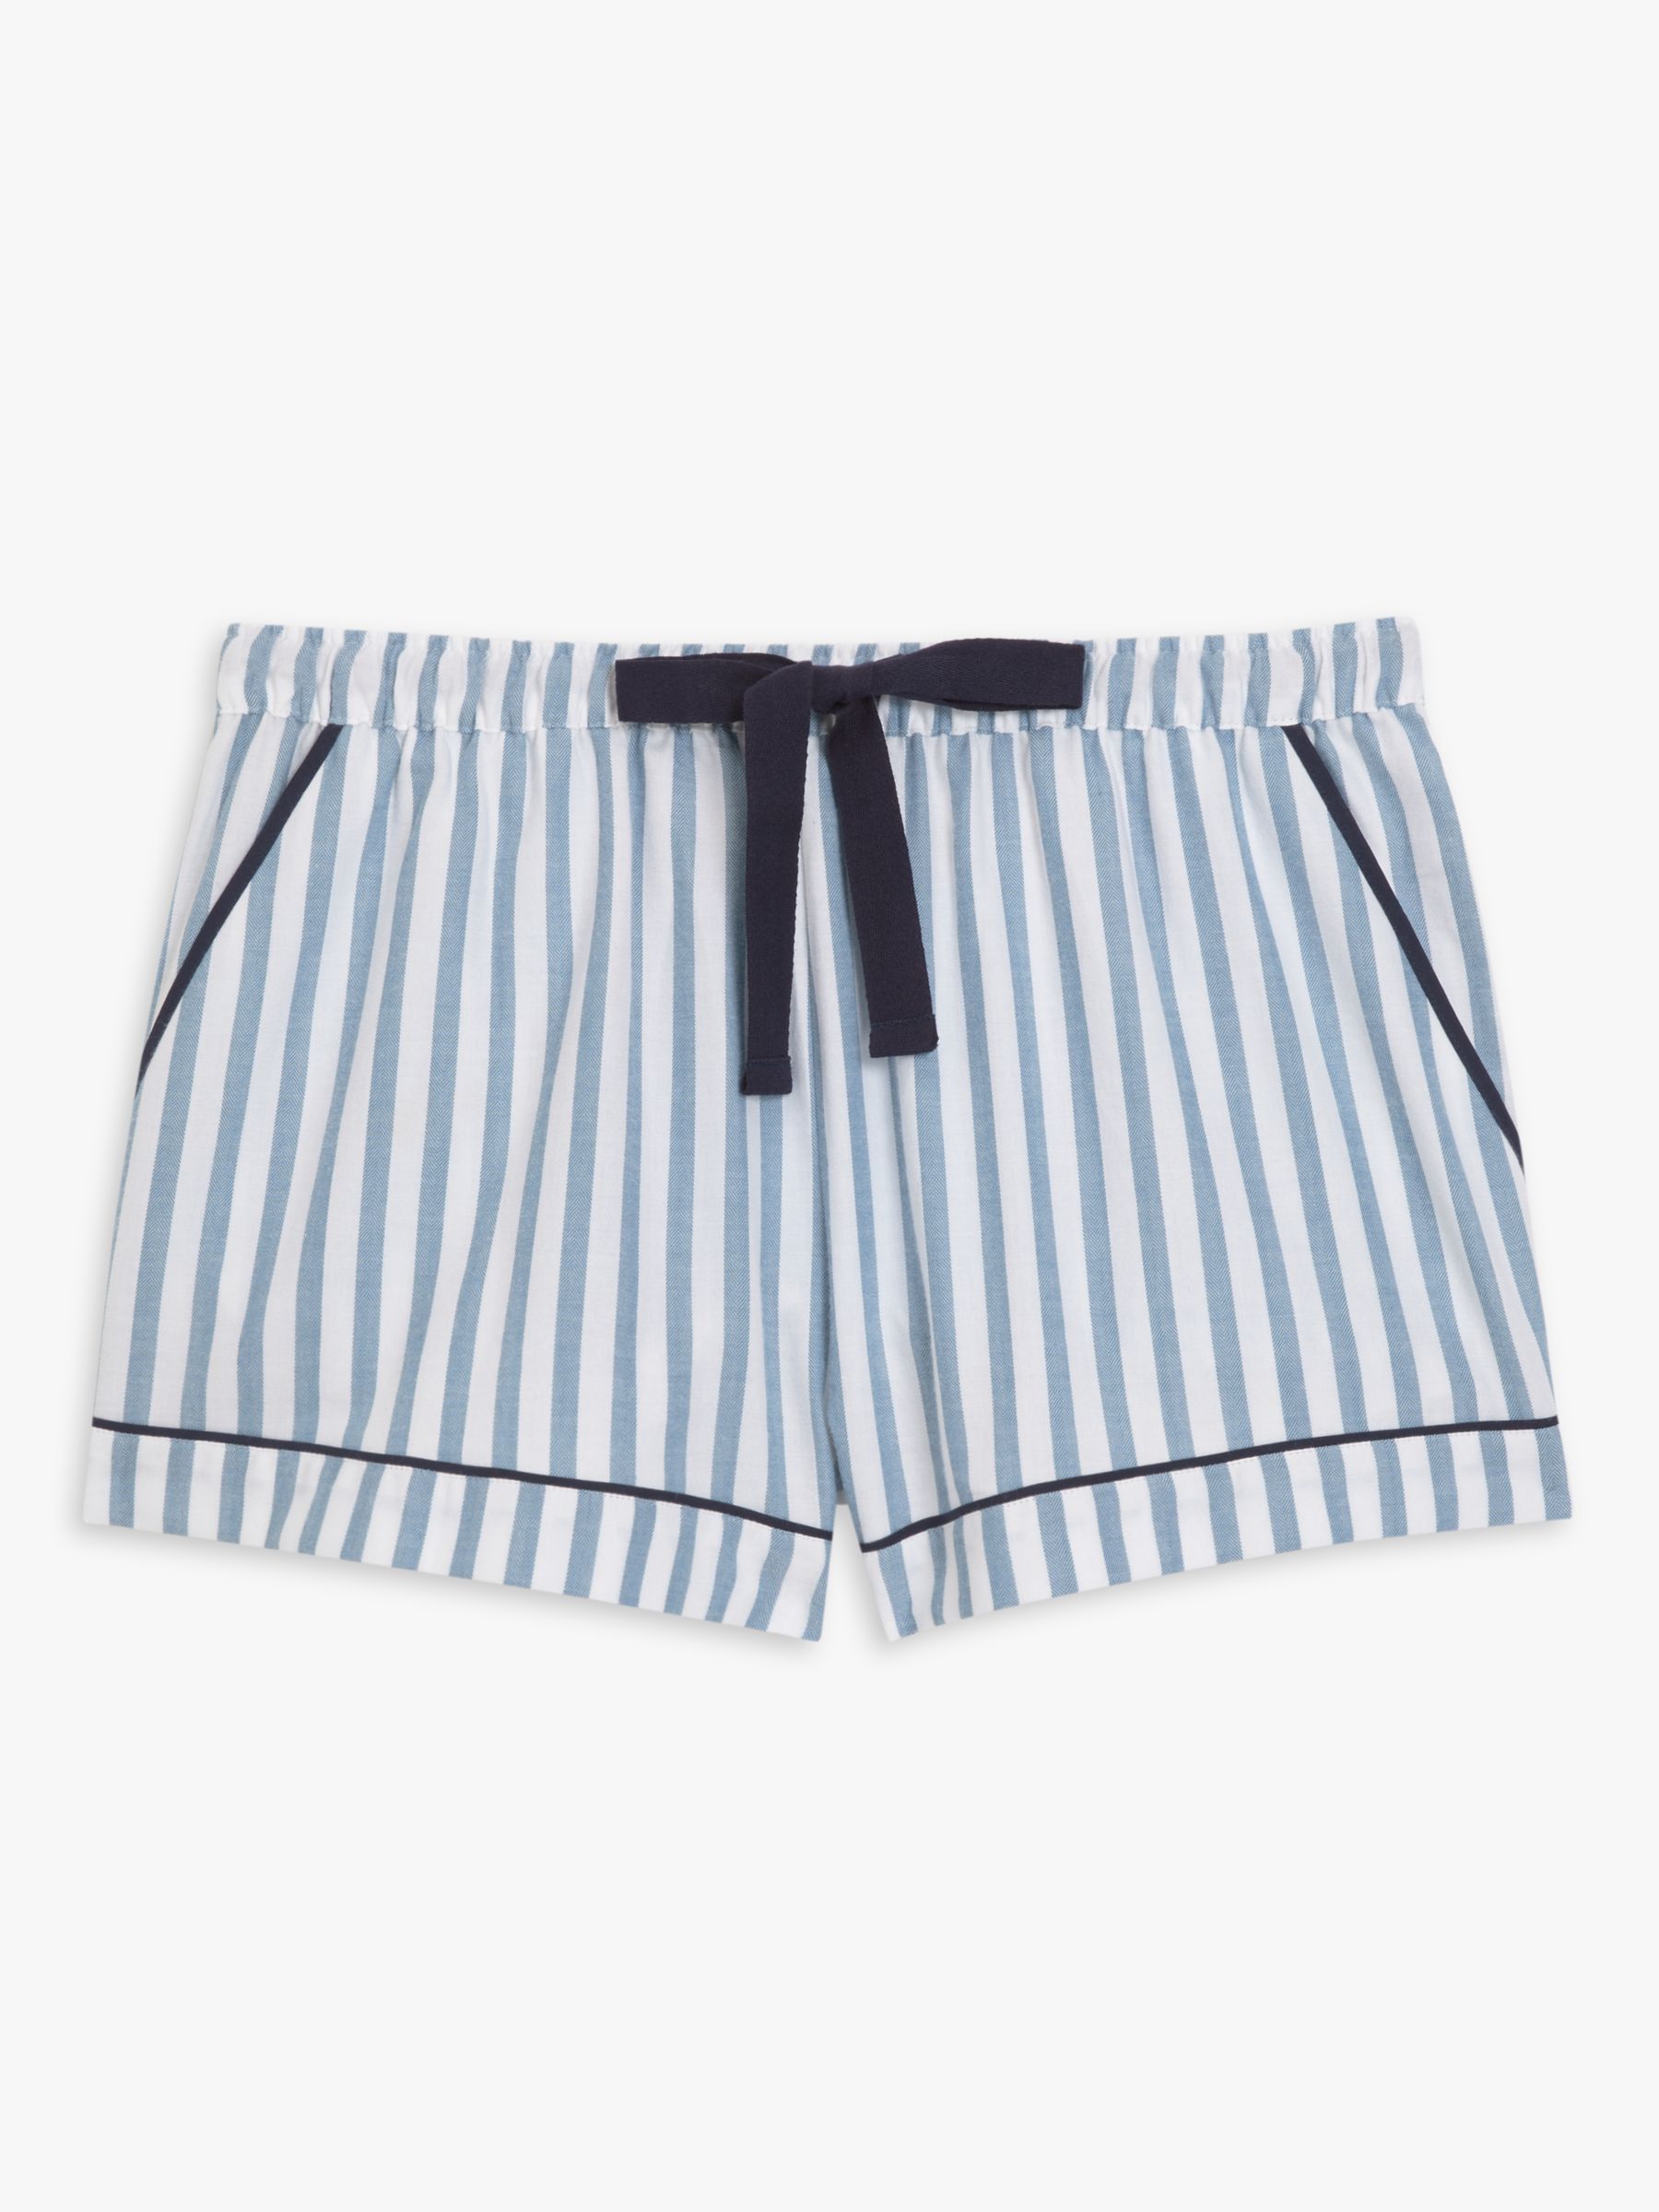 John Lewis Luna Stripe Pyjama Shorts, White/Blue, 8